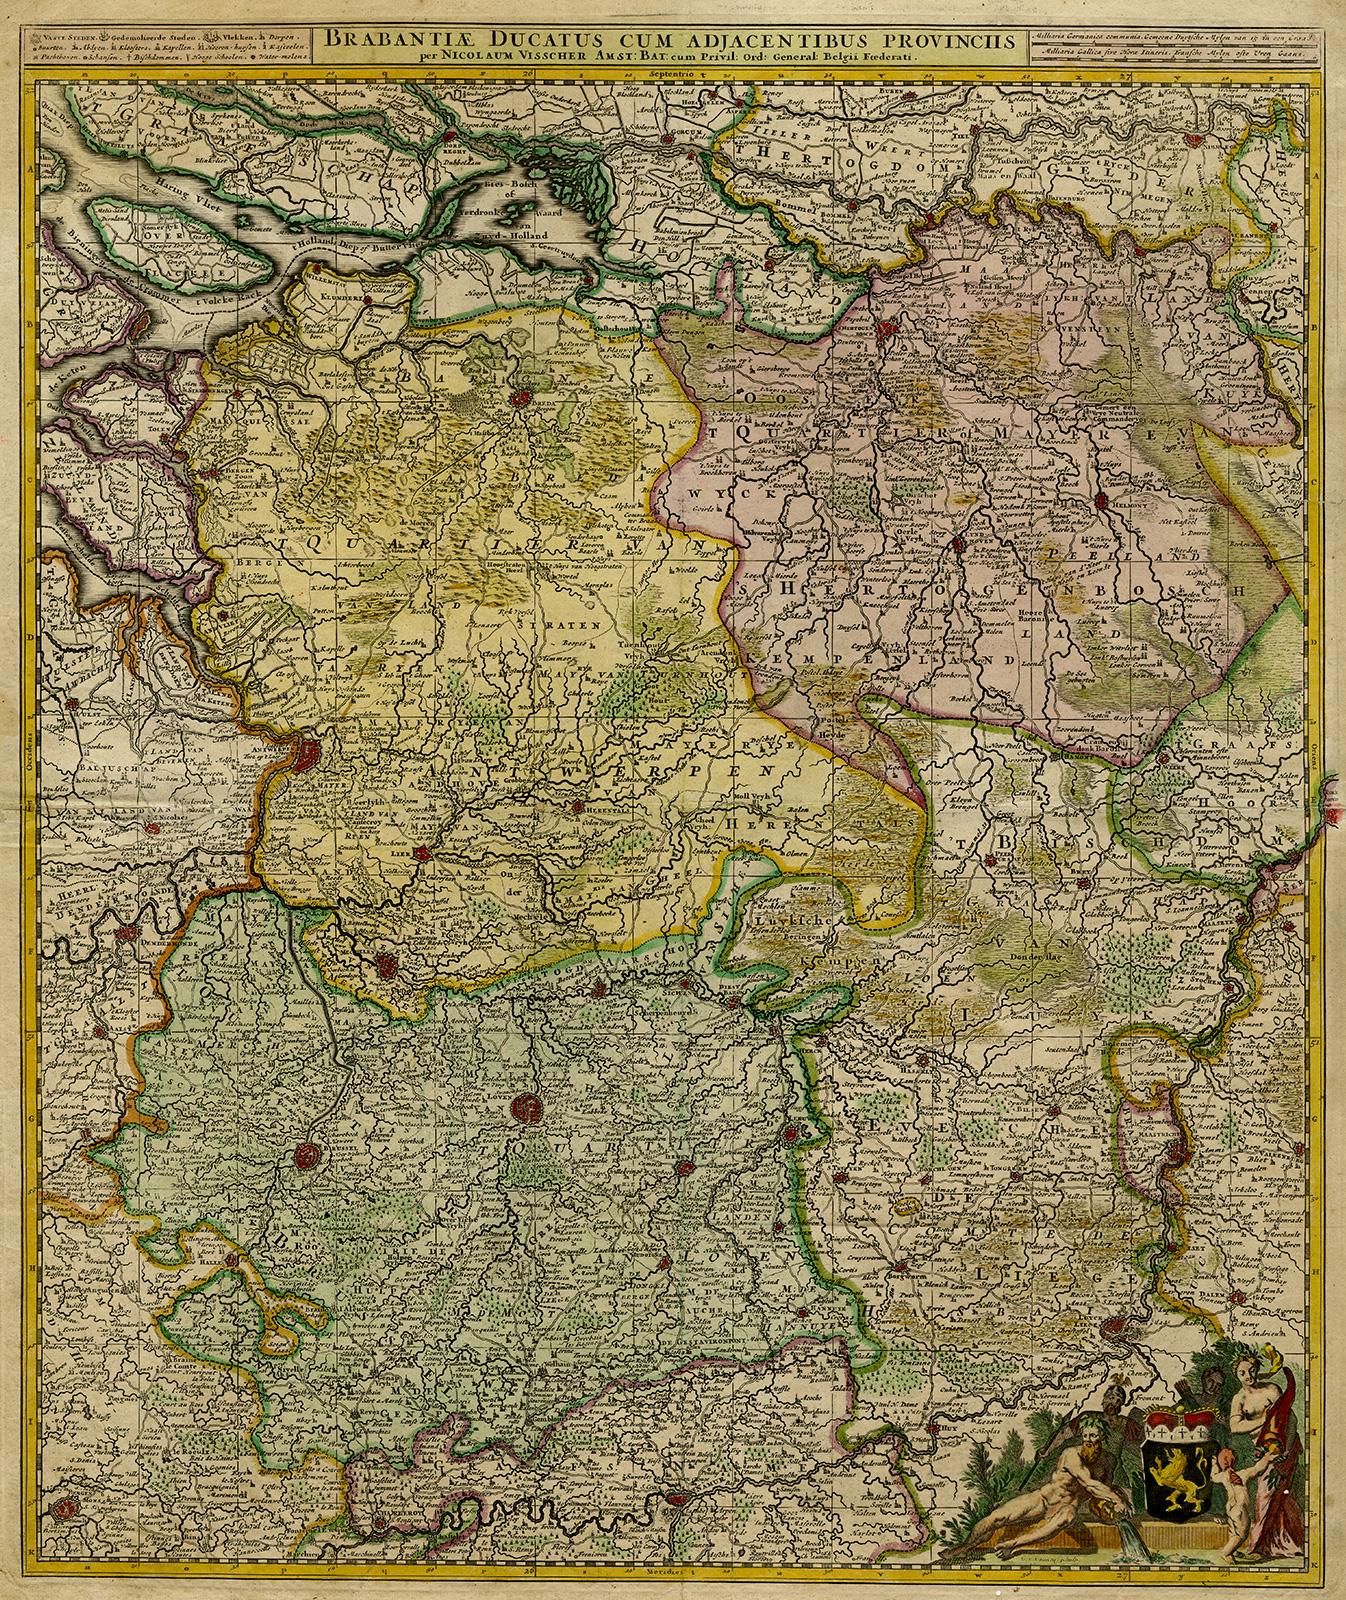 Nicolaus Visscher Print - Antique map of Duchy of Brabant by Visscher - Handcoloured engraving - 17th c.